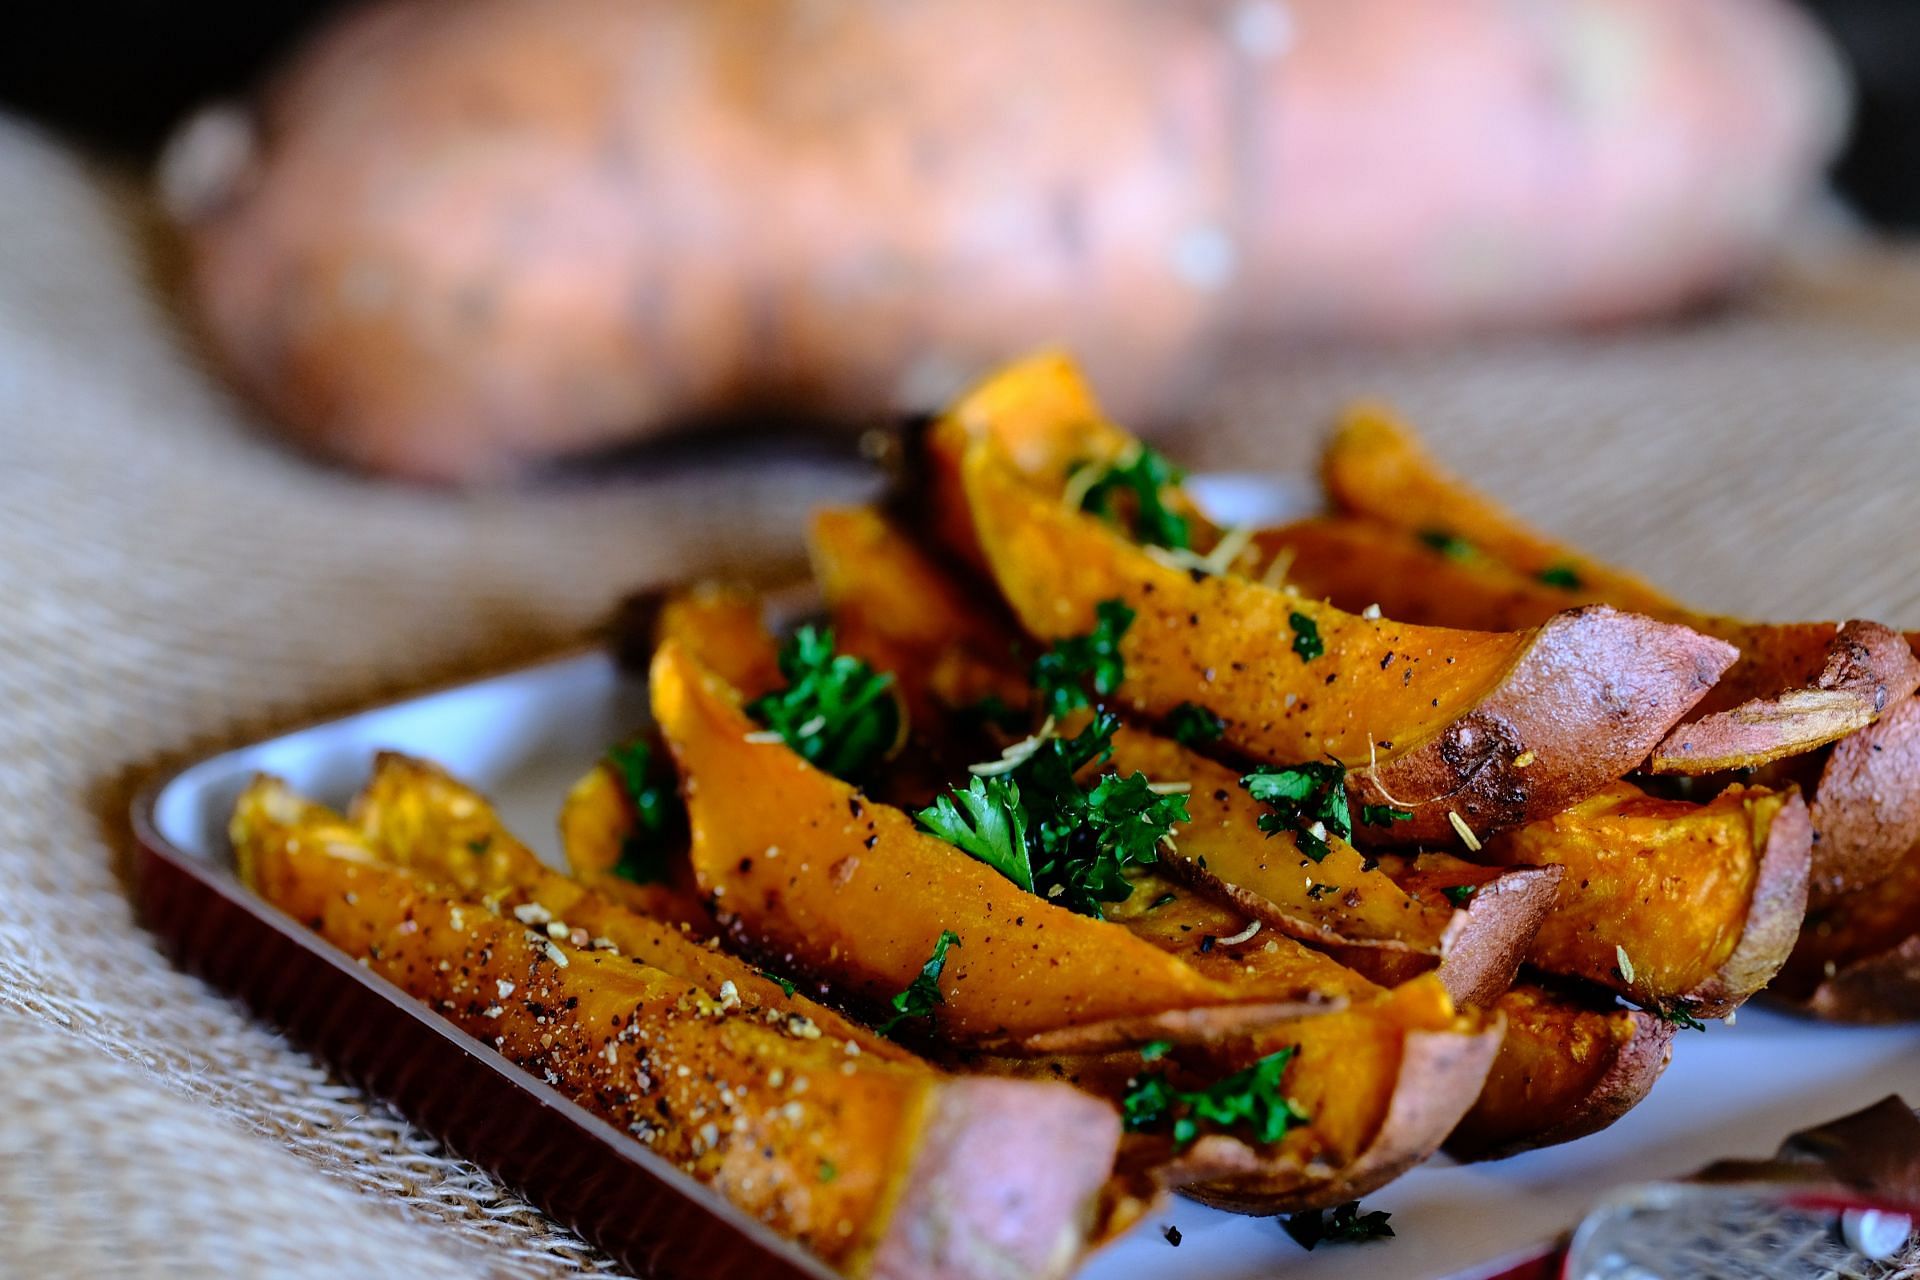 sweet potatoes can help you feel satisfied and full. (image via unsplash / rajesh)